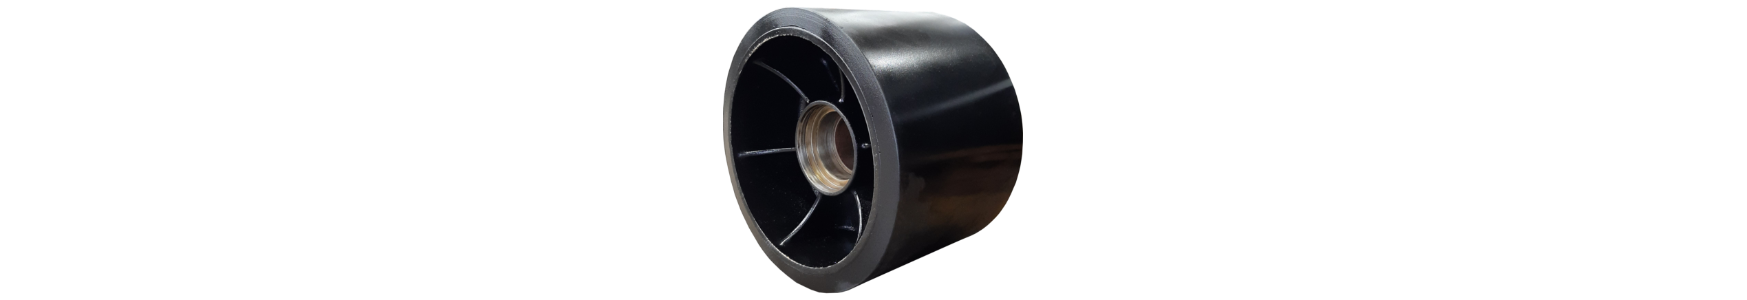 Photo of Case STX mid-roller rebuild (130mm spigot diameter)